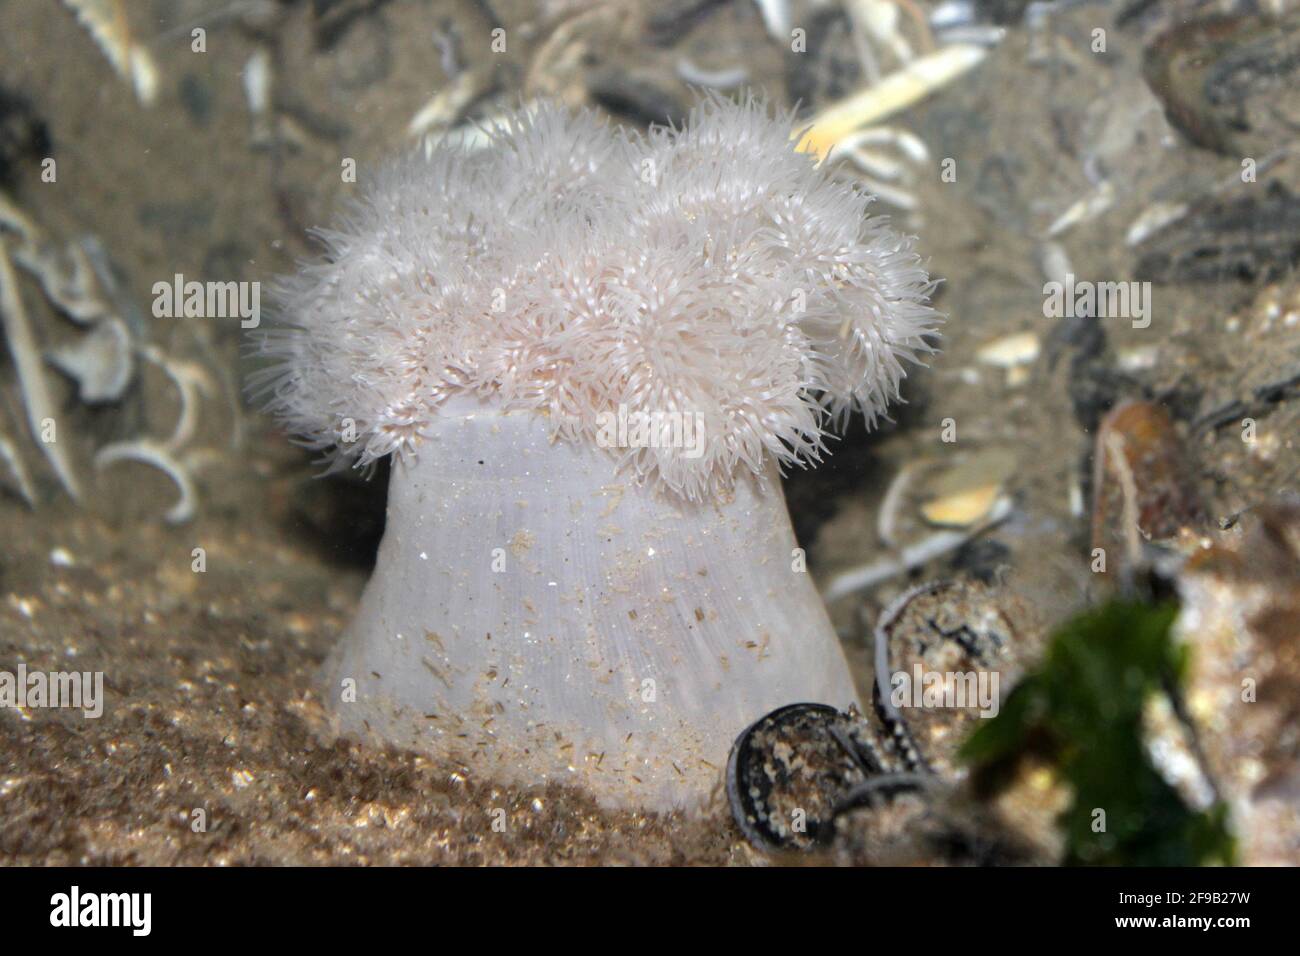 Plumose Anemone (Metridium senile syn. Metridium dianthus) Stock Photo